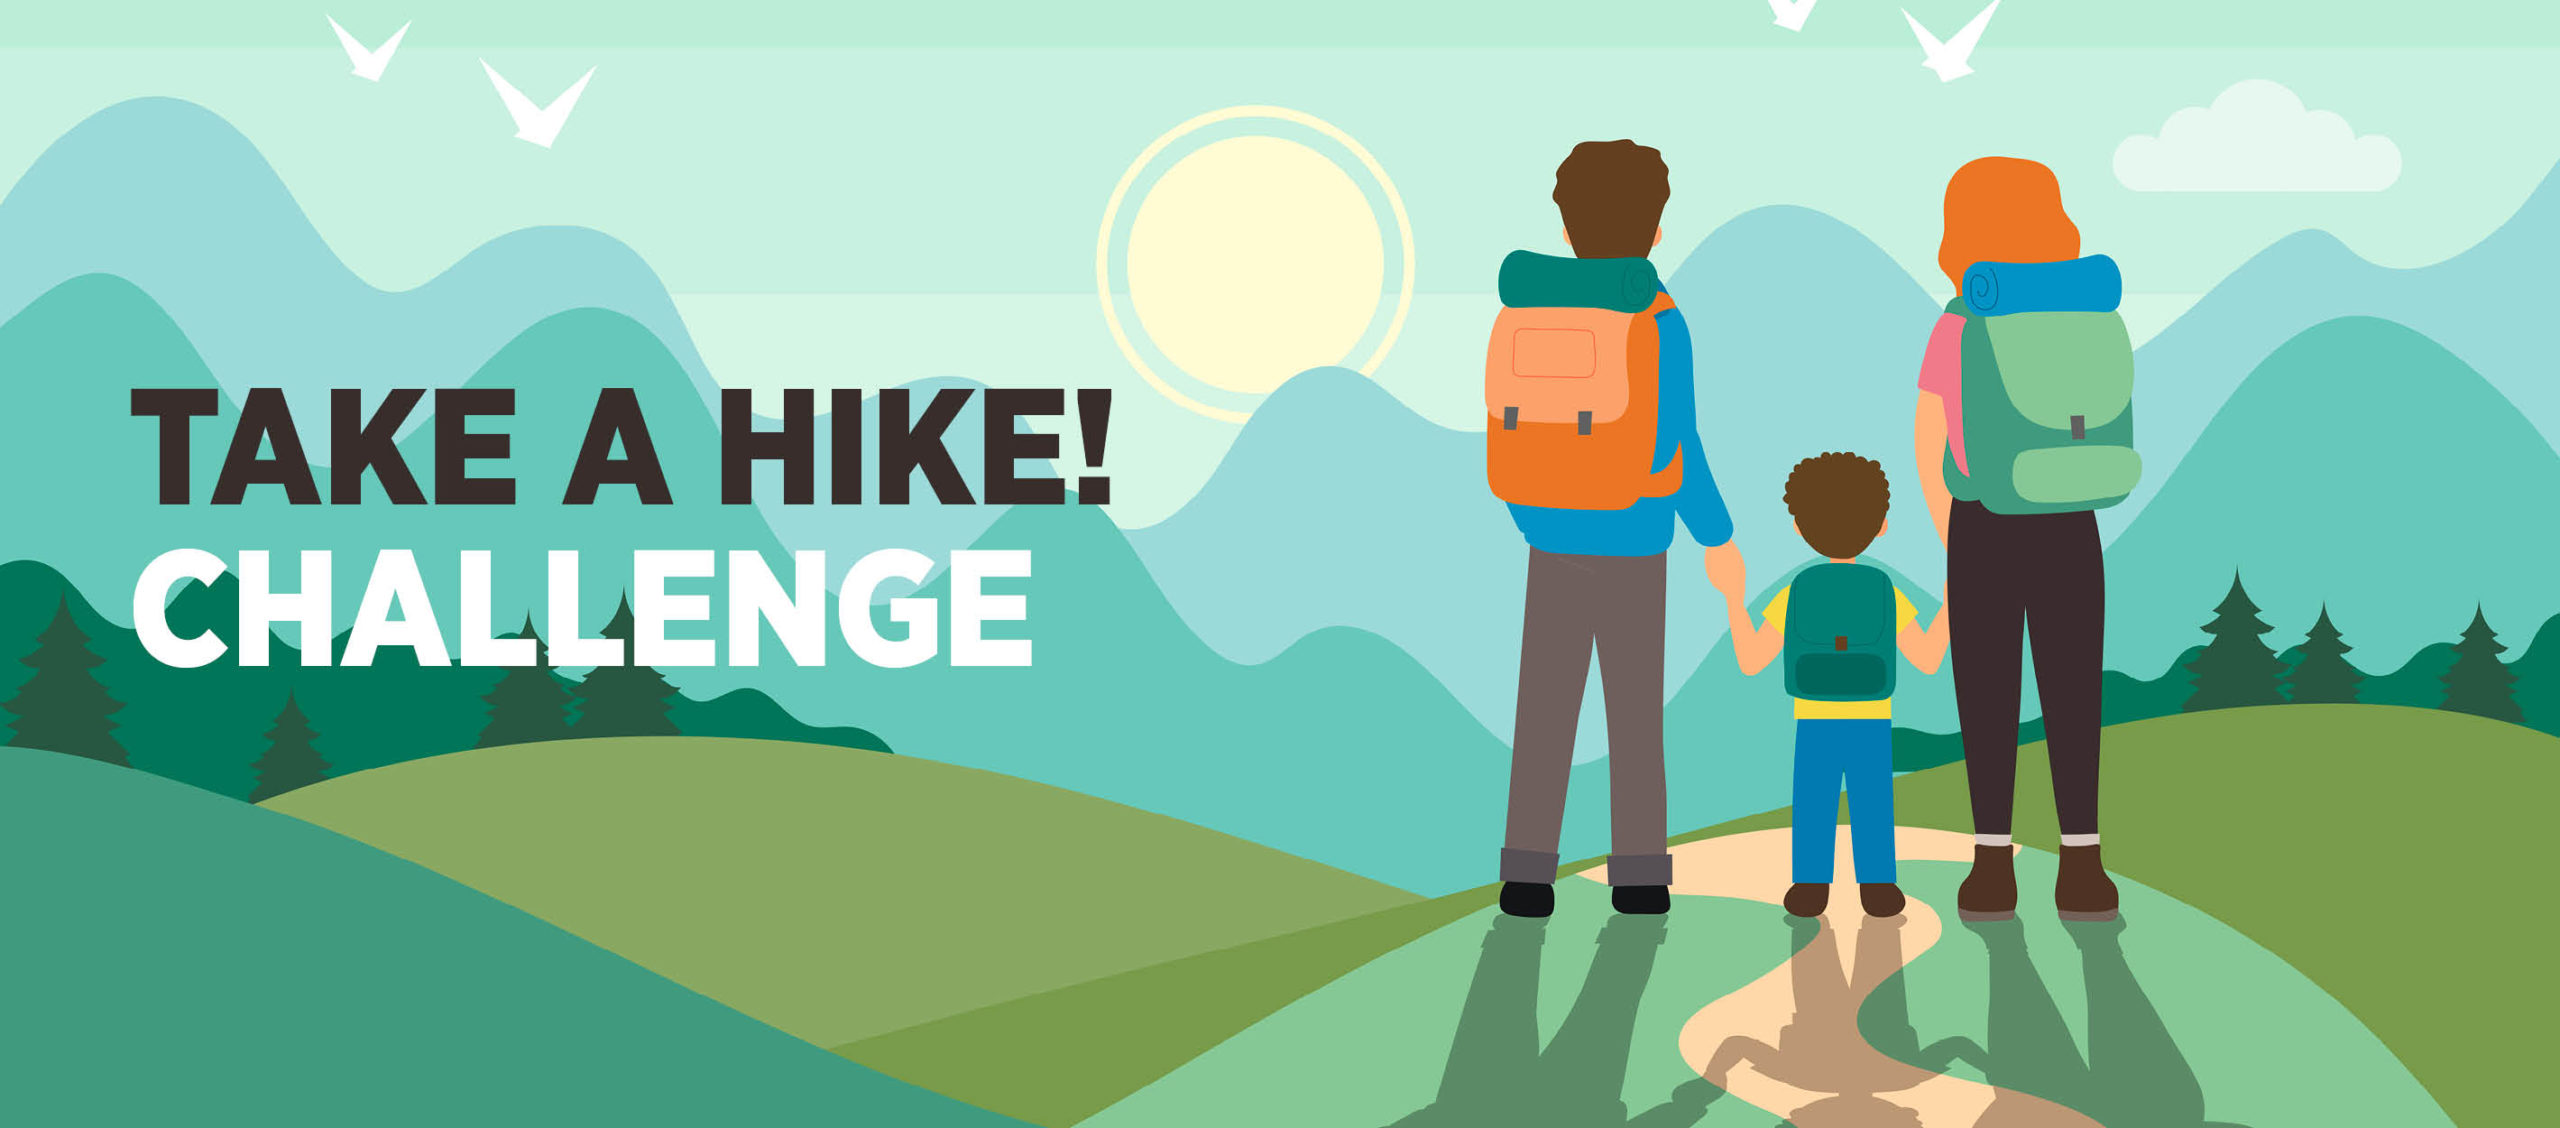 Take a Hike! Challenge Naperville magazine